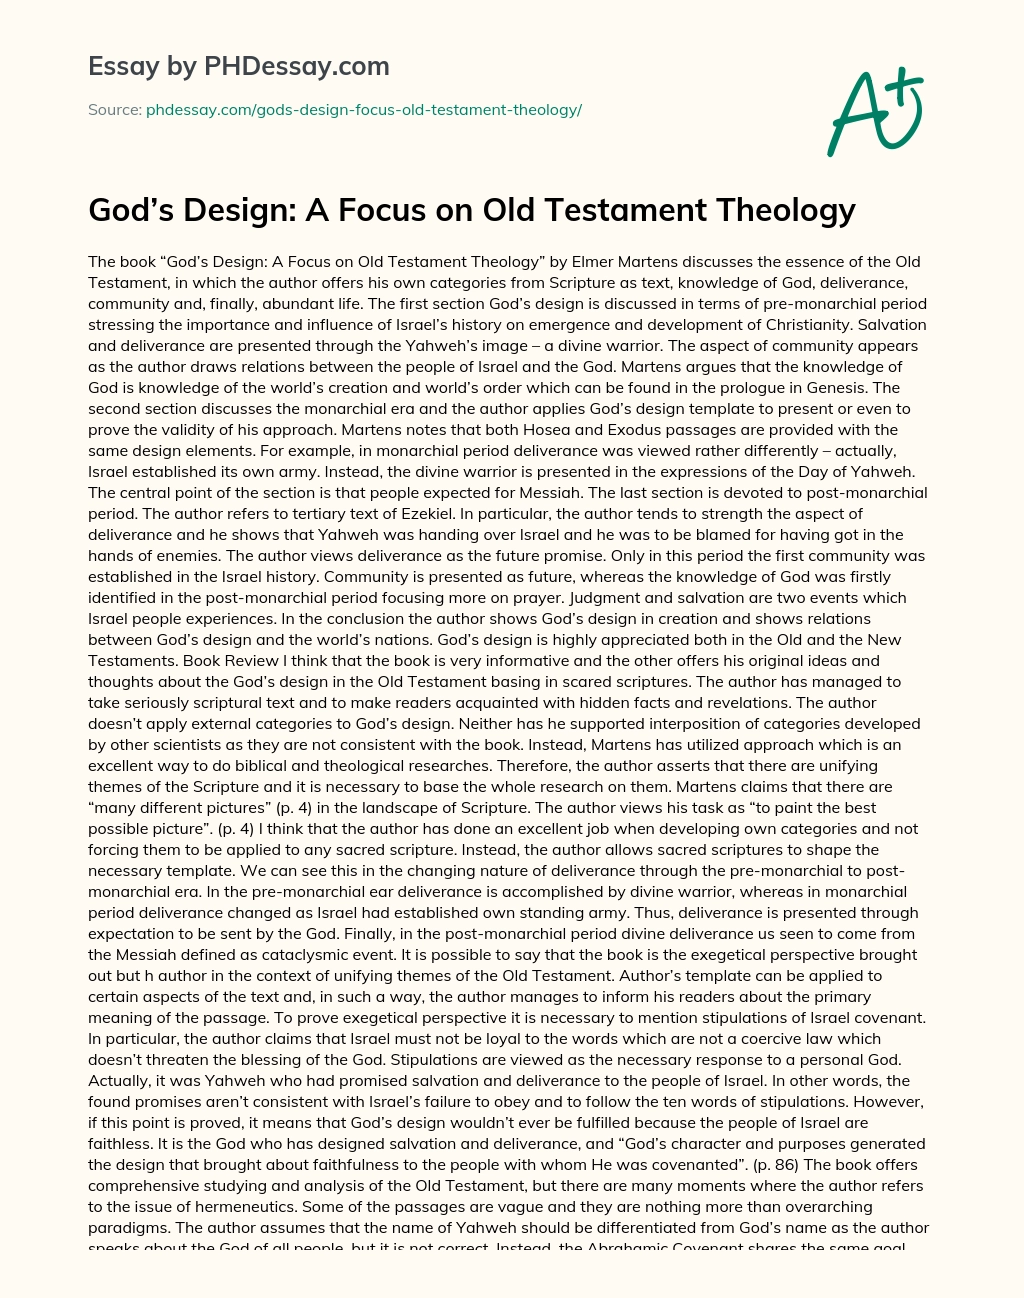 God’s Design: A Focus on Old Testament Theology essay